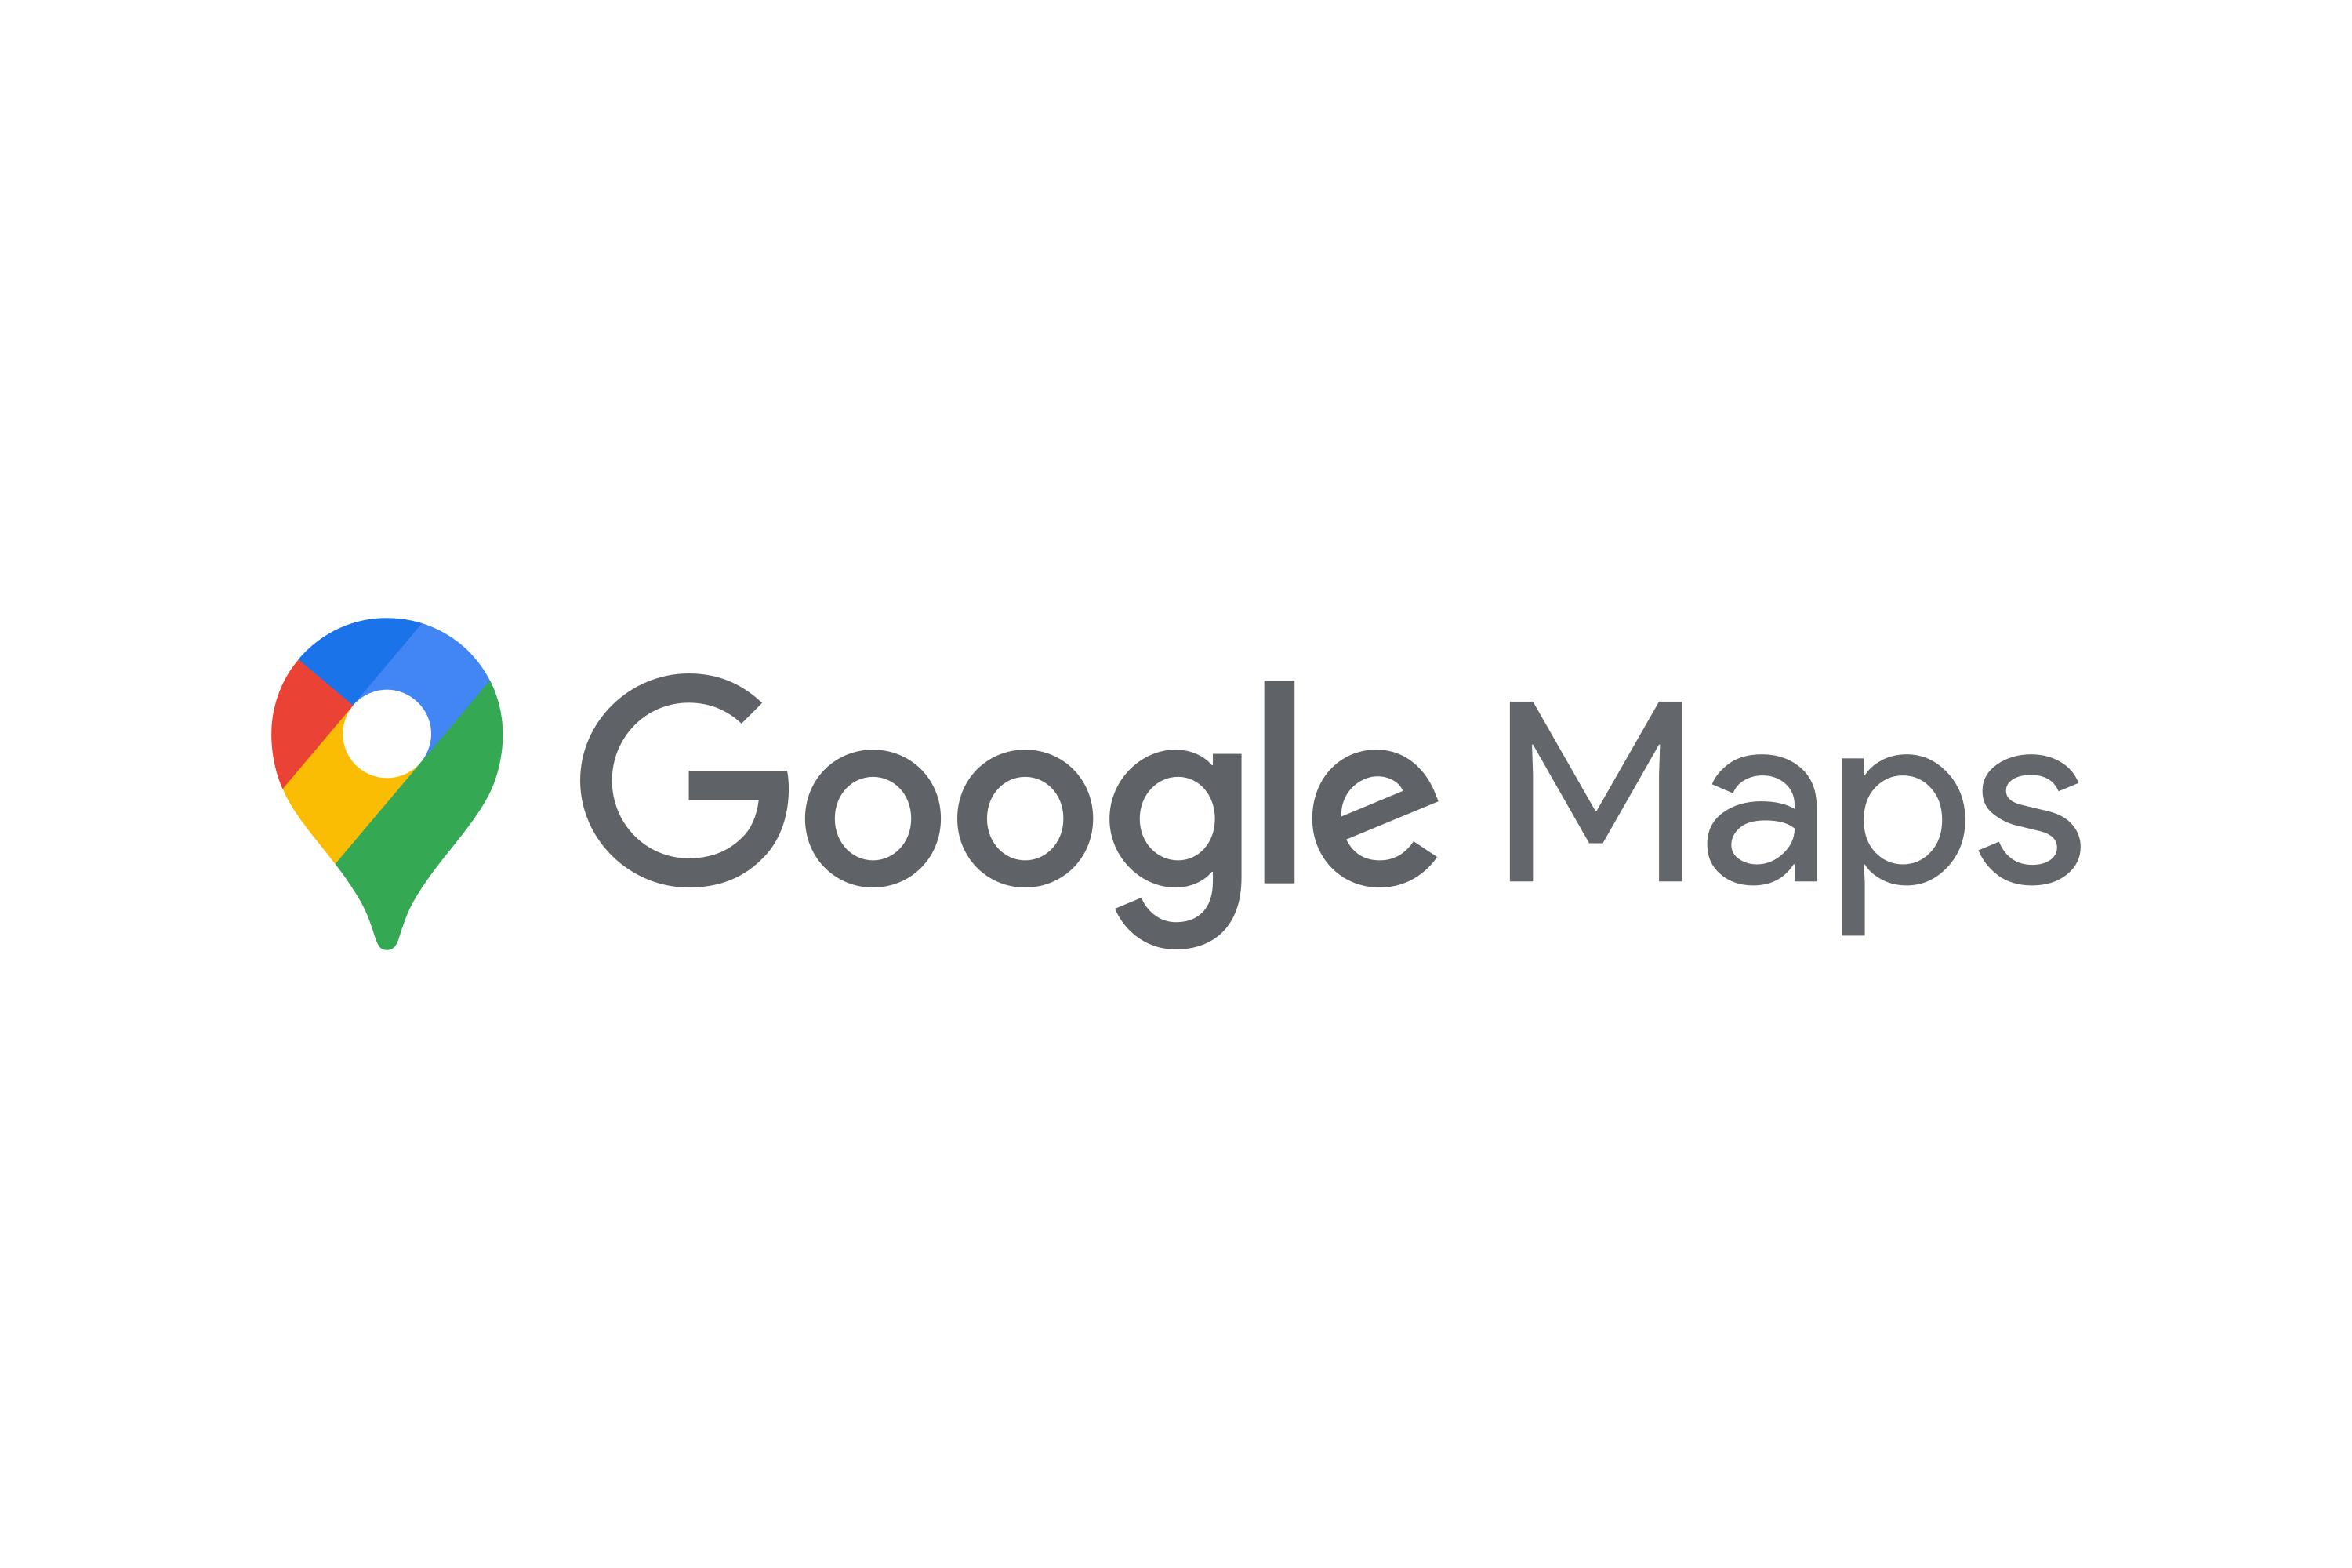 ikibana born google maps